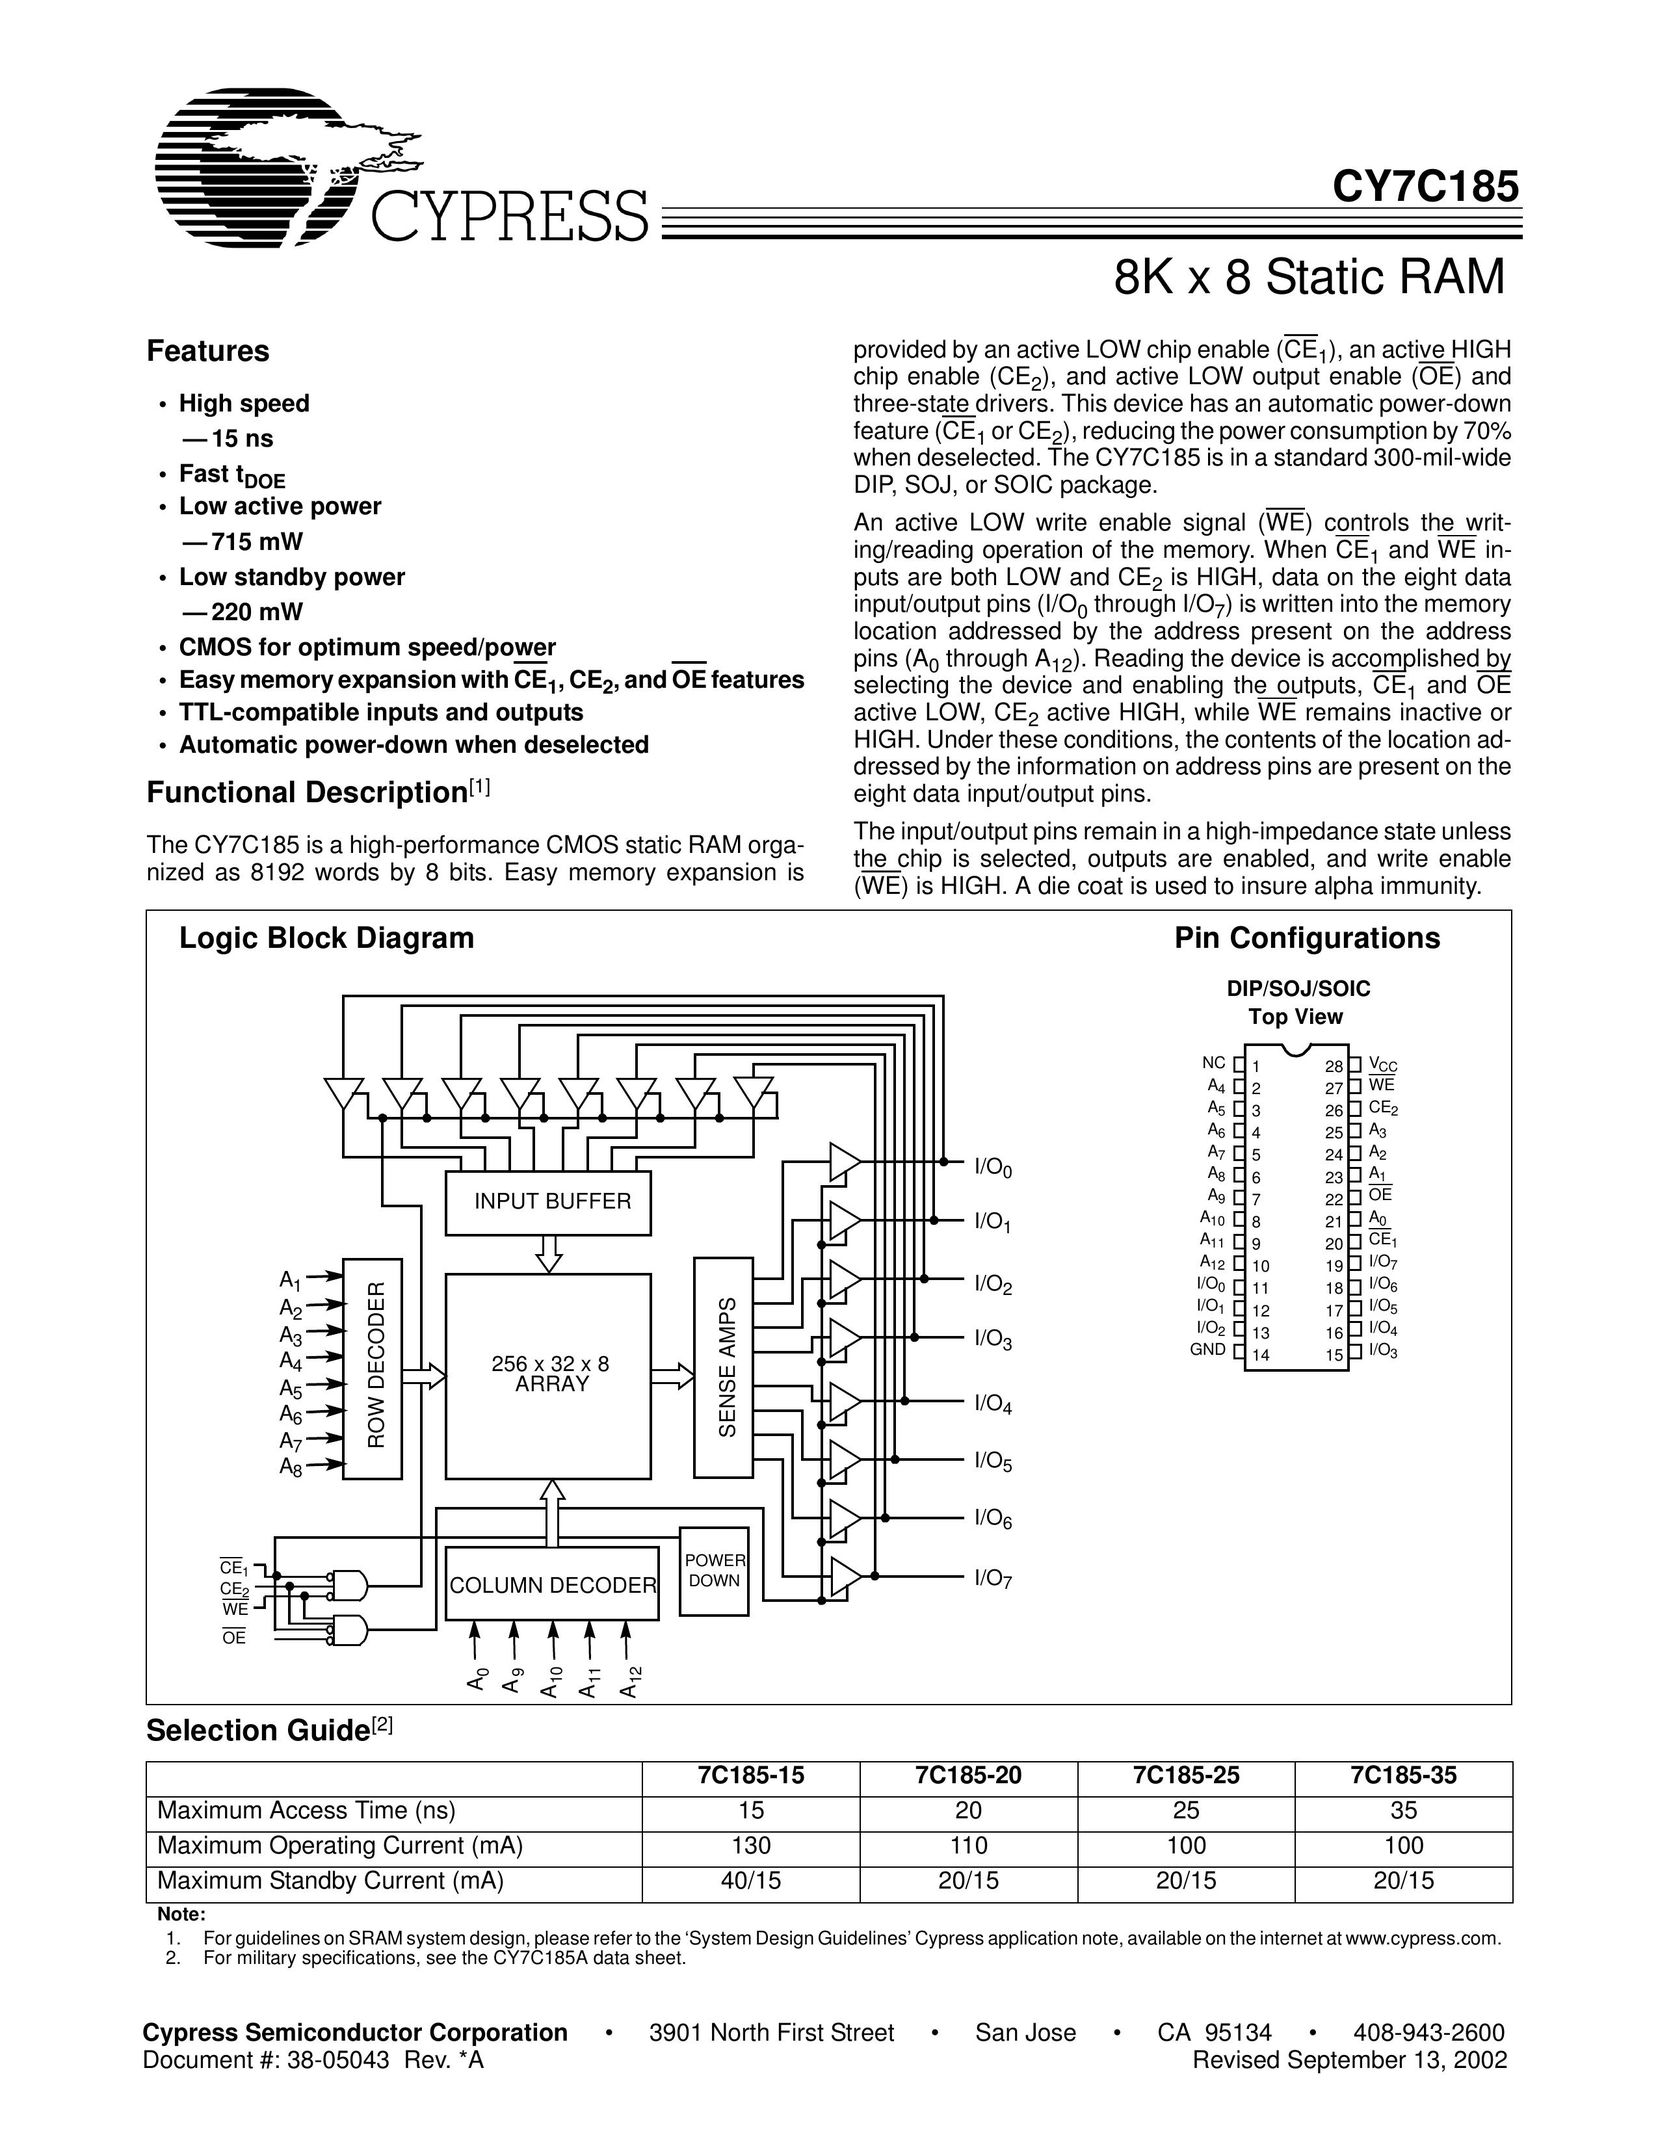 Cypress 7C185-35 Computer Hardware User Manual